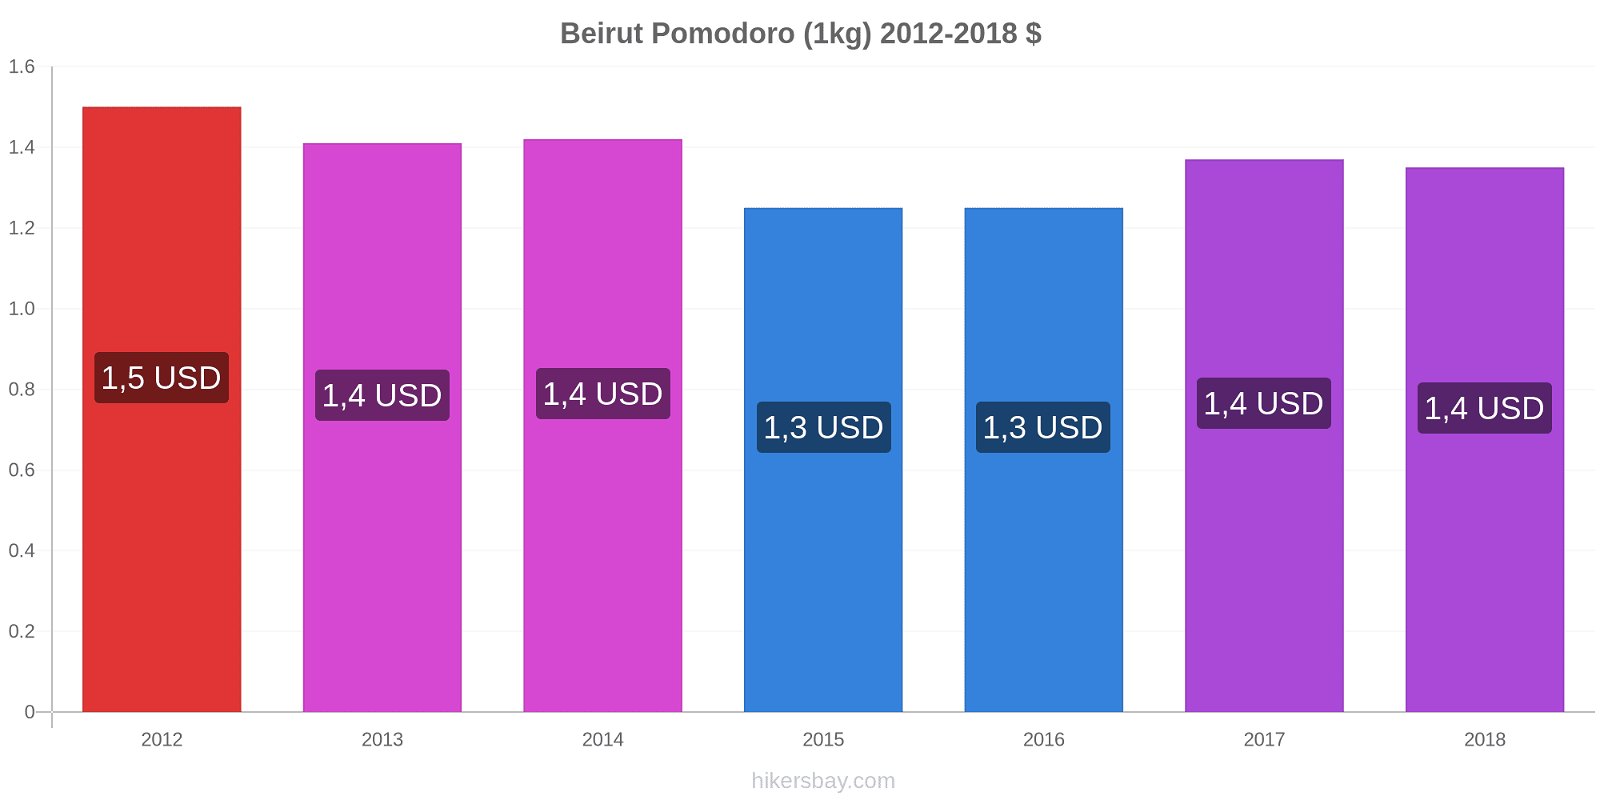 Beirut variazioni di prezzo Pomodoro (1kg) hikersbay.com